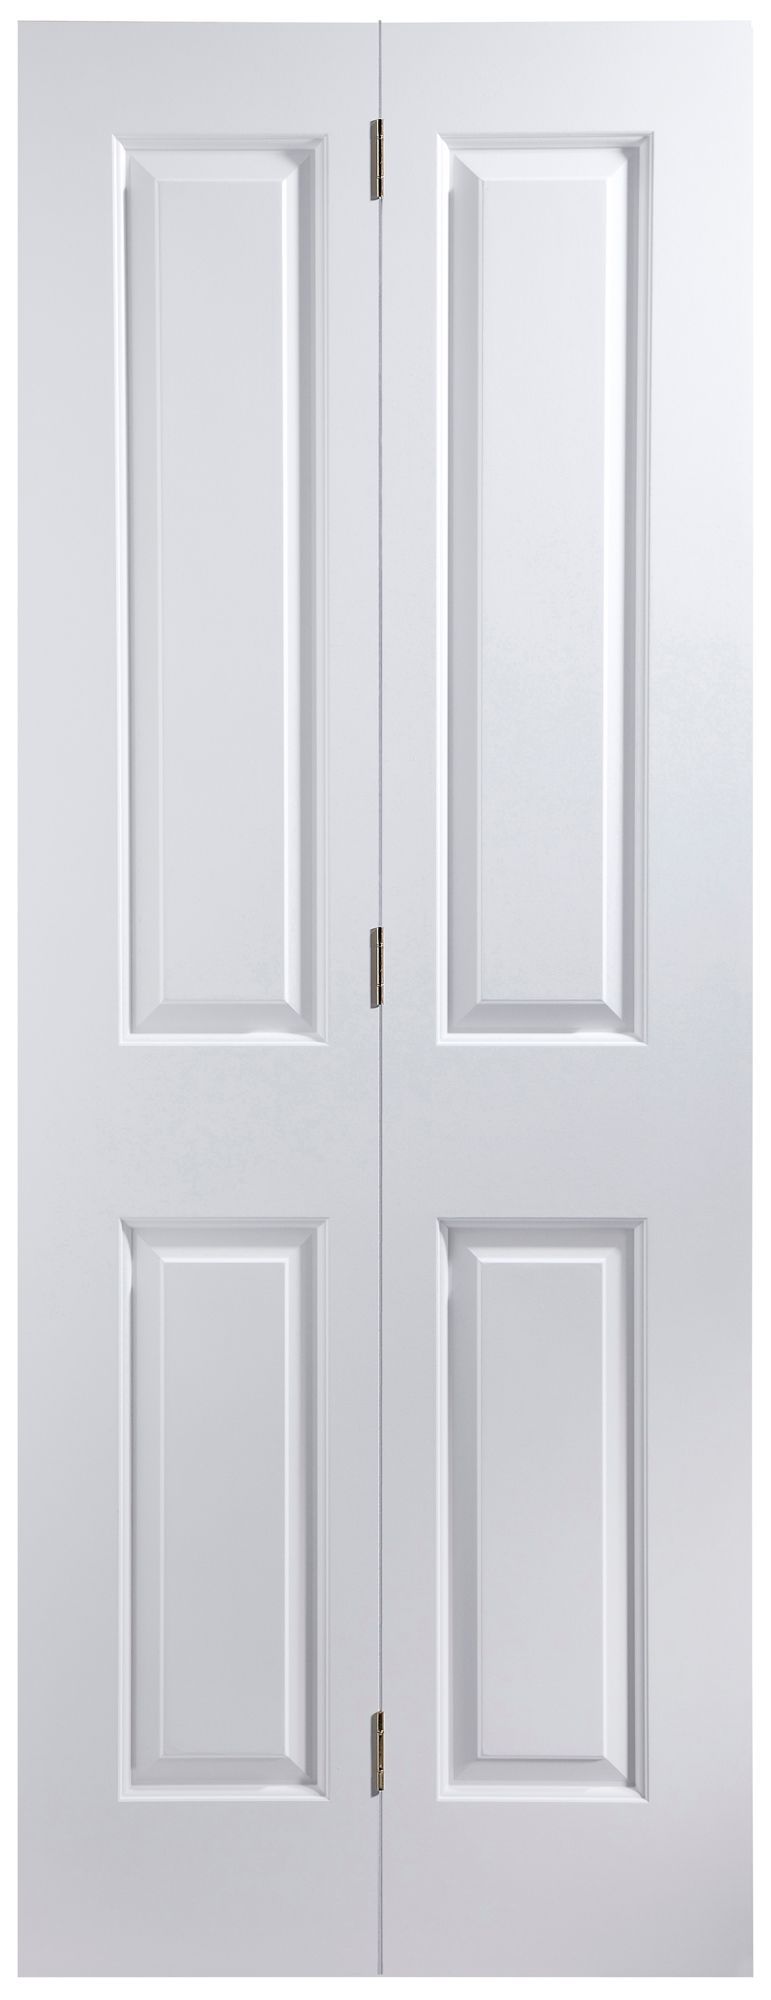 4 panel Unglazed Contemporary White Internal Bi-fold Door set, (H)1950mm (W)750mm